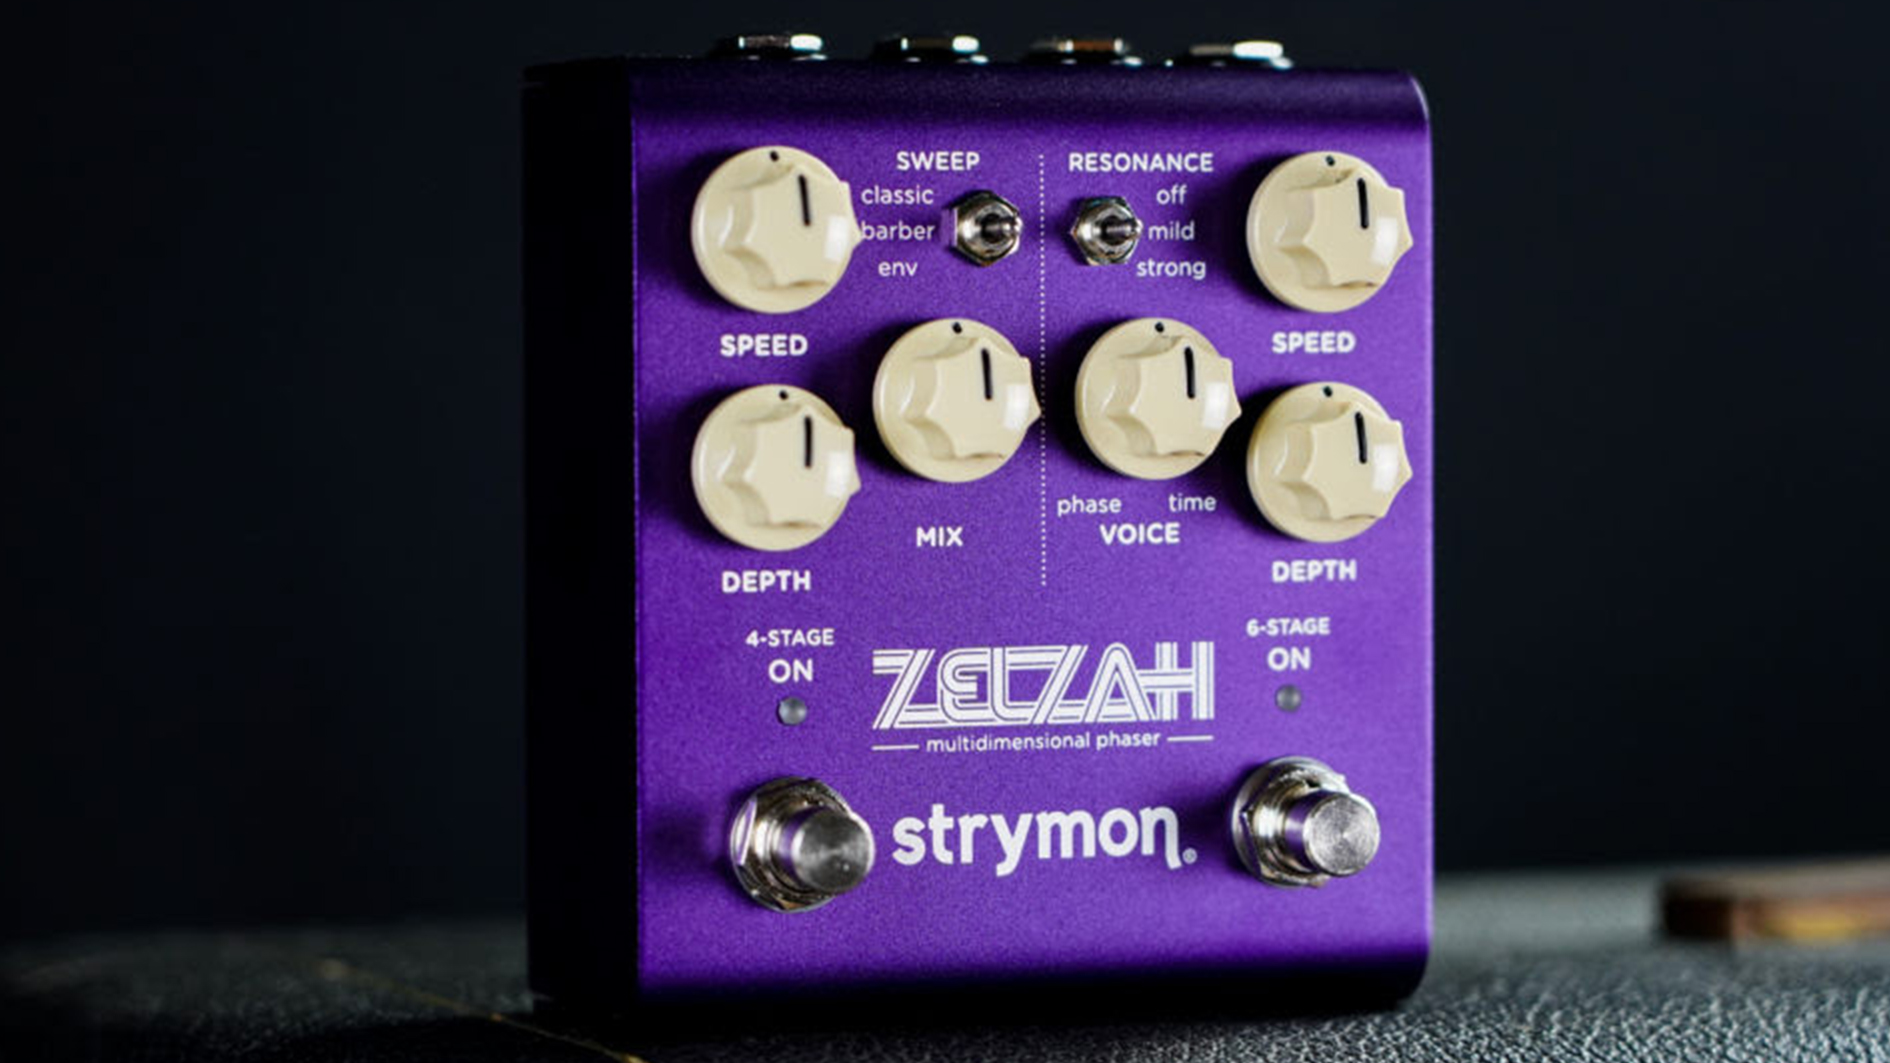 Strymon launches “multidimensional phaser” pedal, the Zelzah